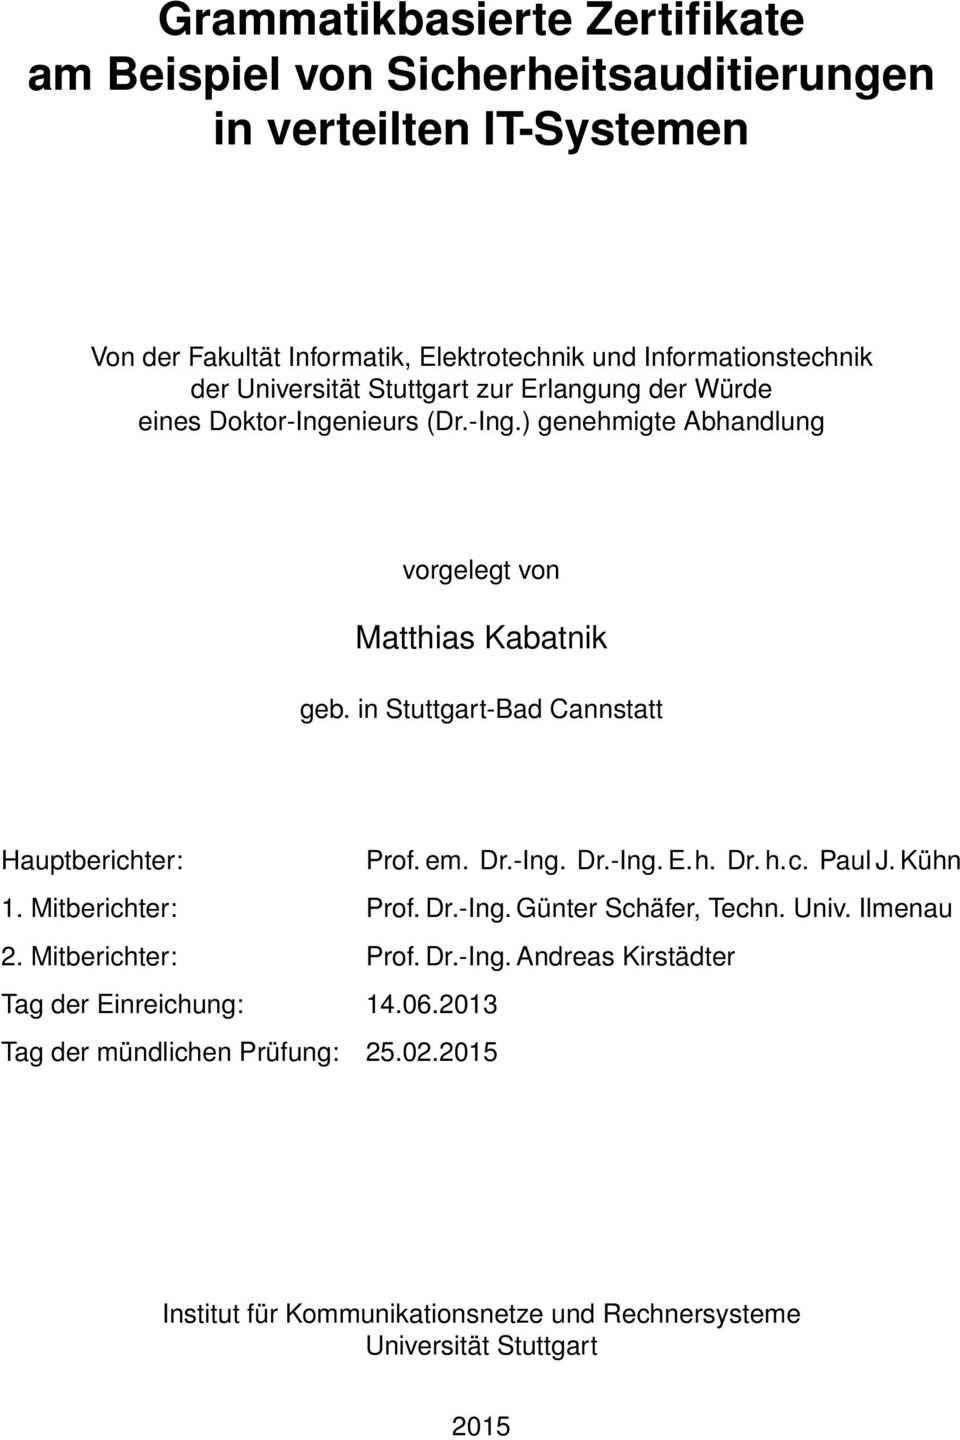 in Stuttgart-Bad Cannstatt Hauptberichter: Prof. em. Dr.-Ing. Dr.-Ing. E.h. Dr. h.c. Paul J. Kühn 1. Mitberichter: Prof. Dr.-Ing. Günter Schäfer, Techn. Univ. Ilmenau 2.